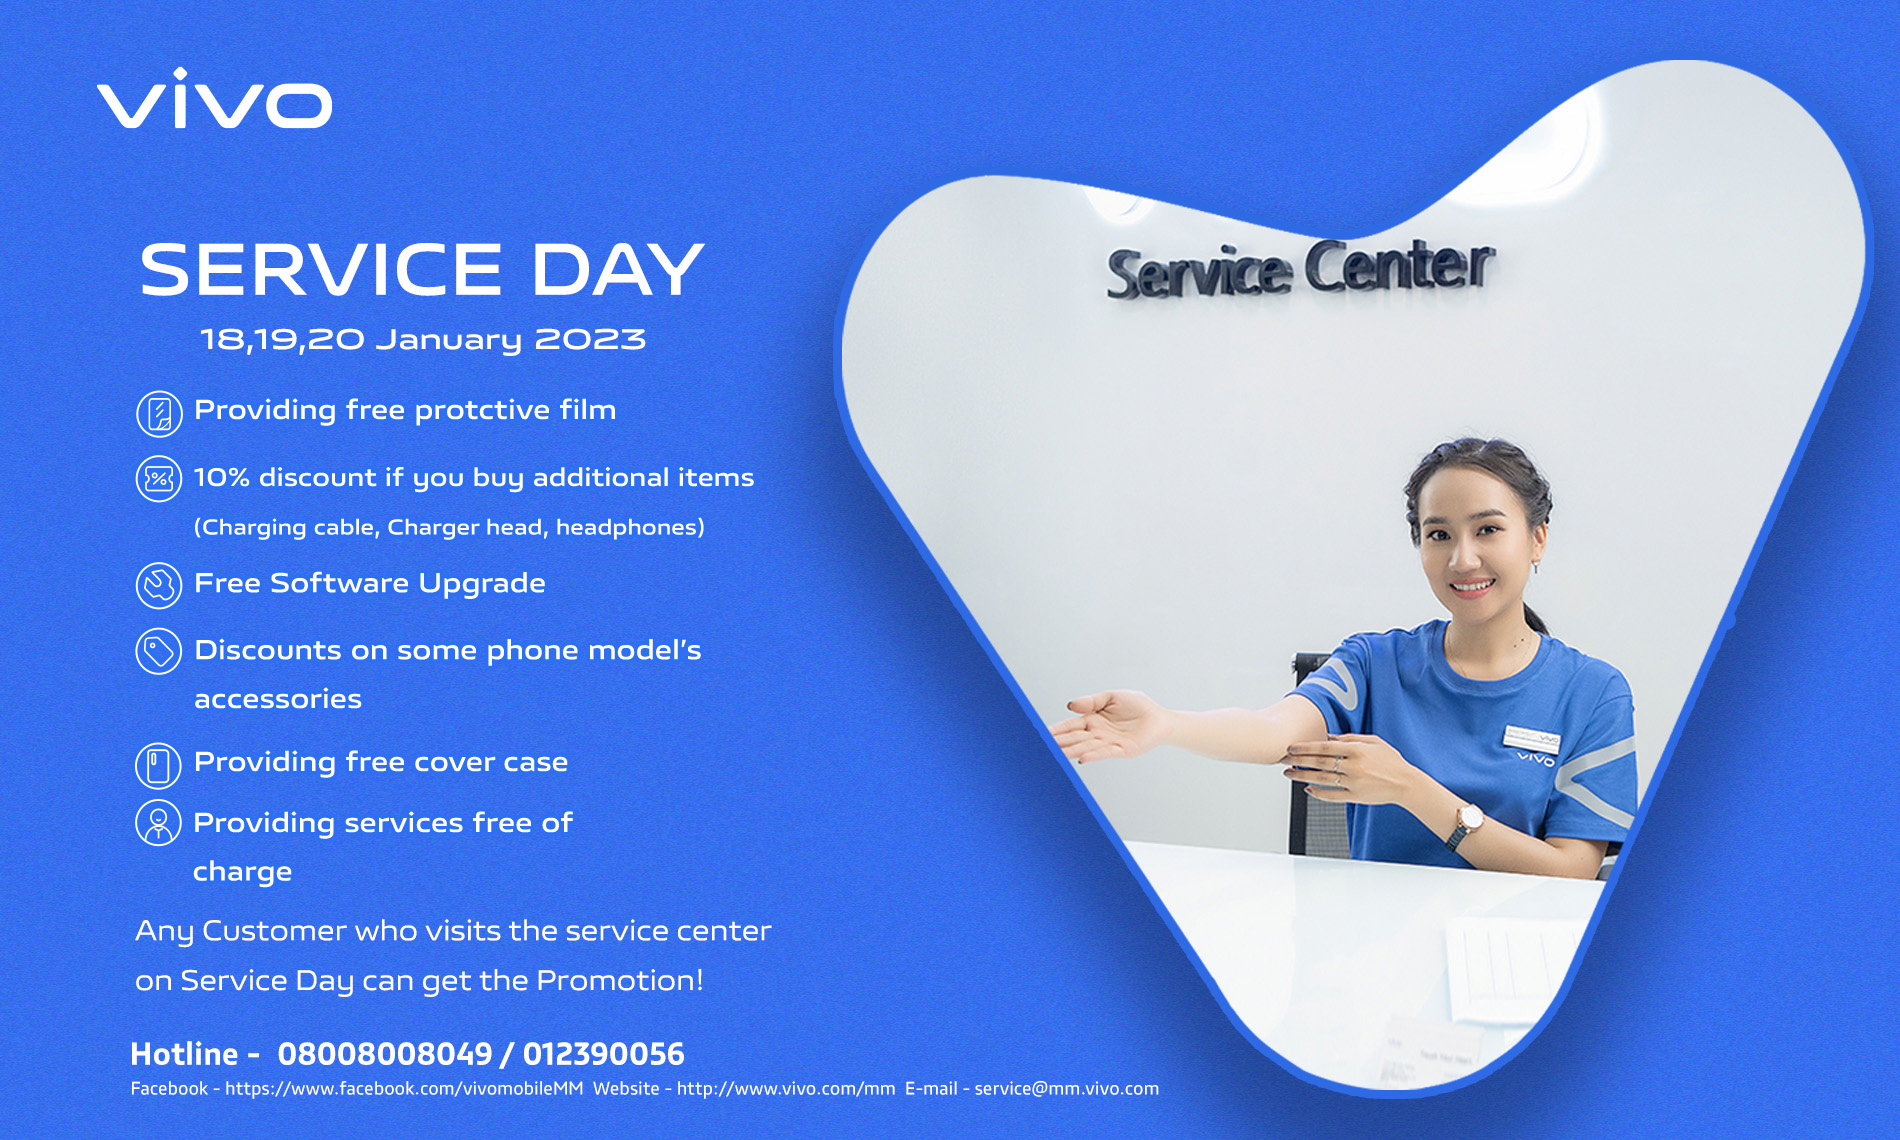 vivo Service Day Benefits in January